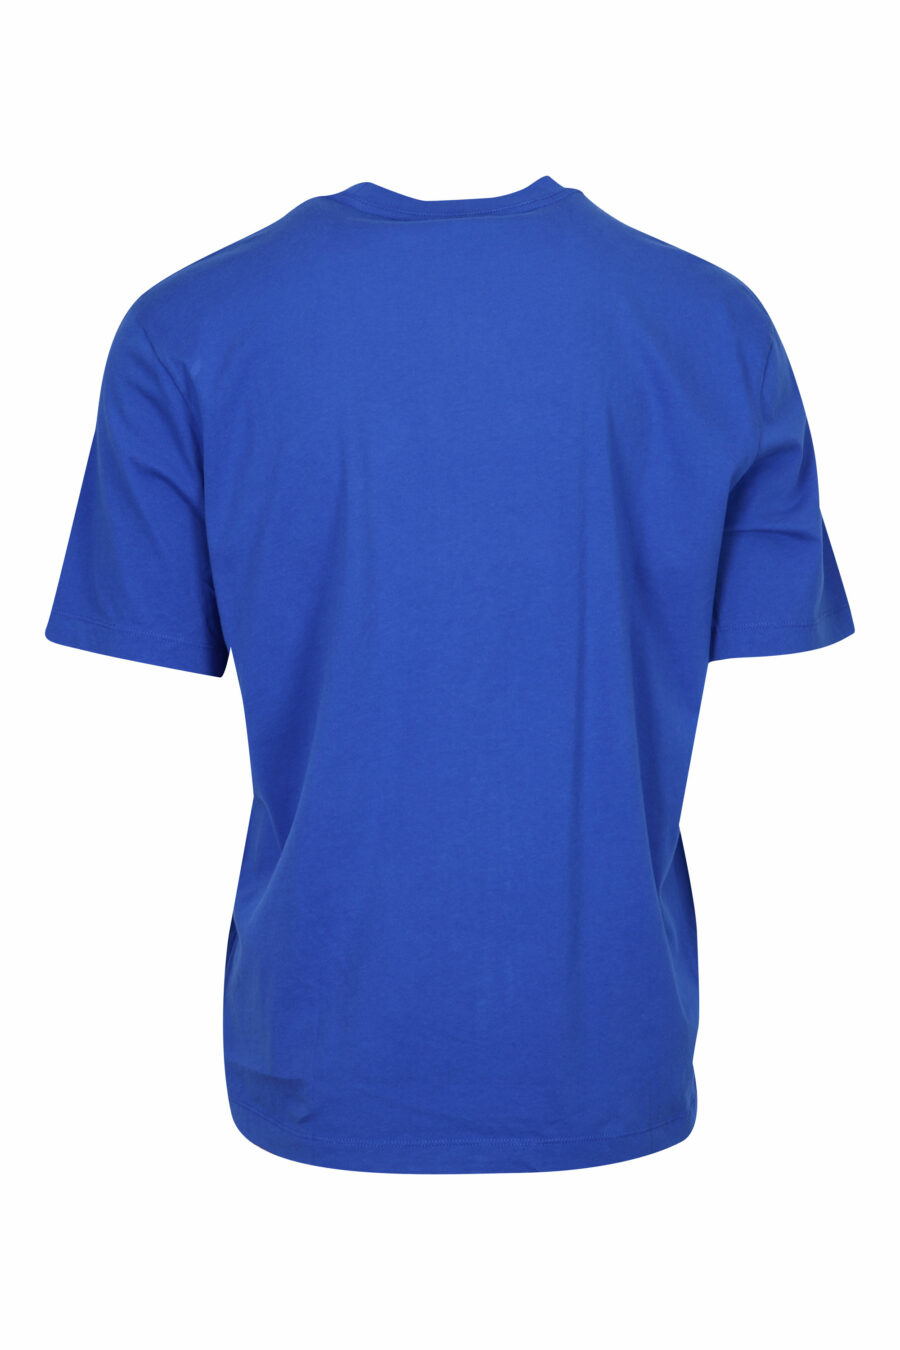 T-shirt bleu avec maxilogo bouclier usé - 8058610830472 1